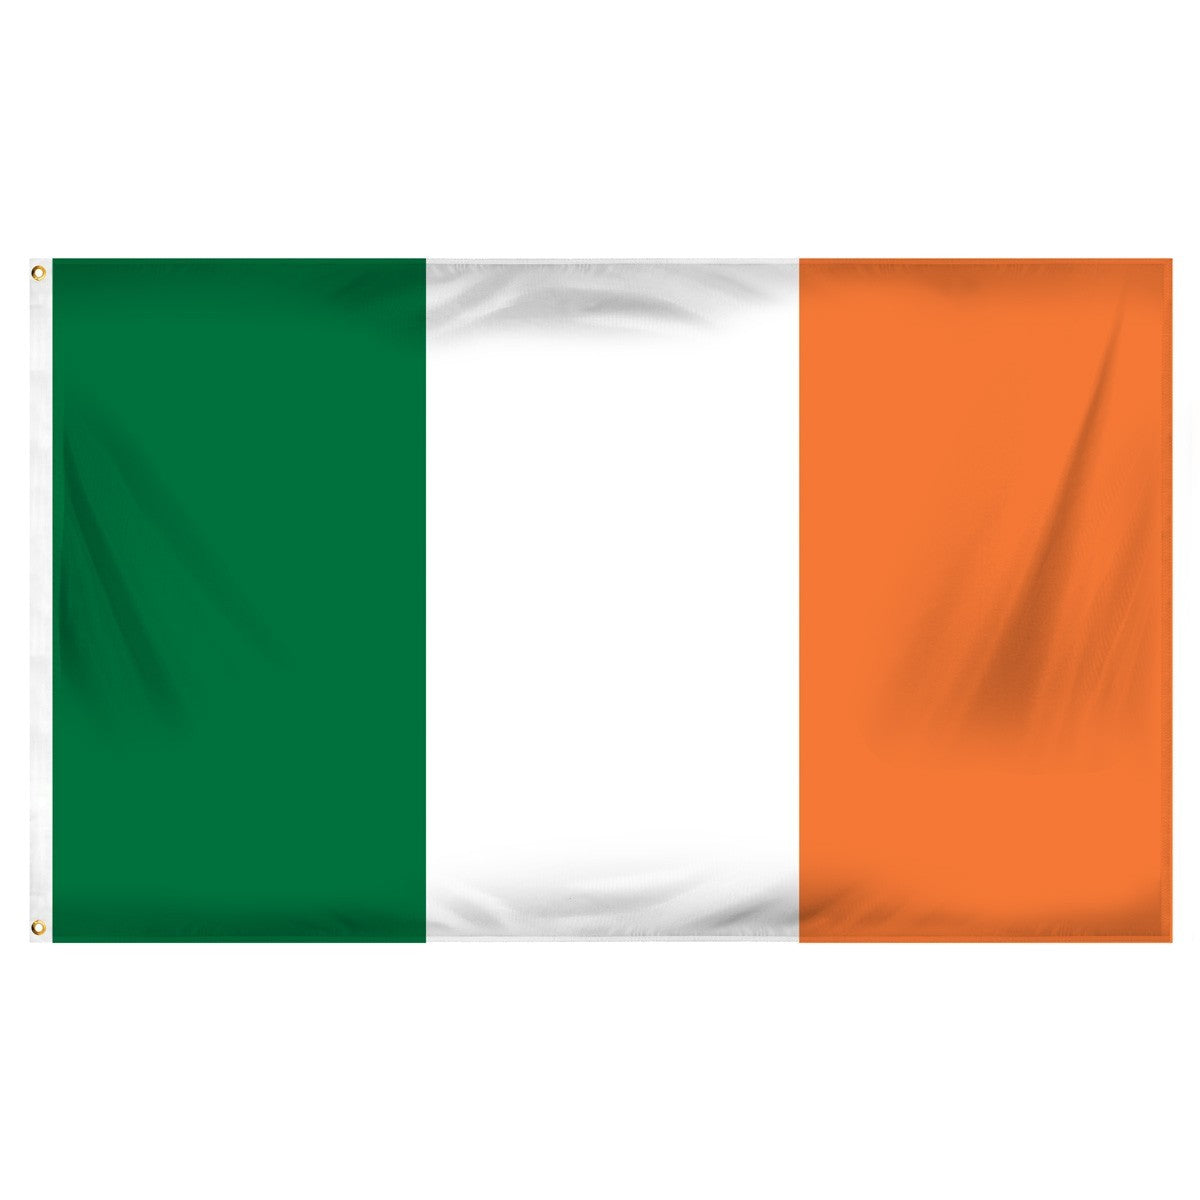 Ireland Flags